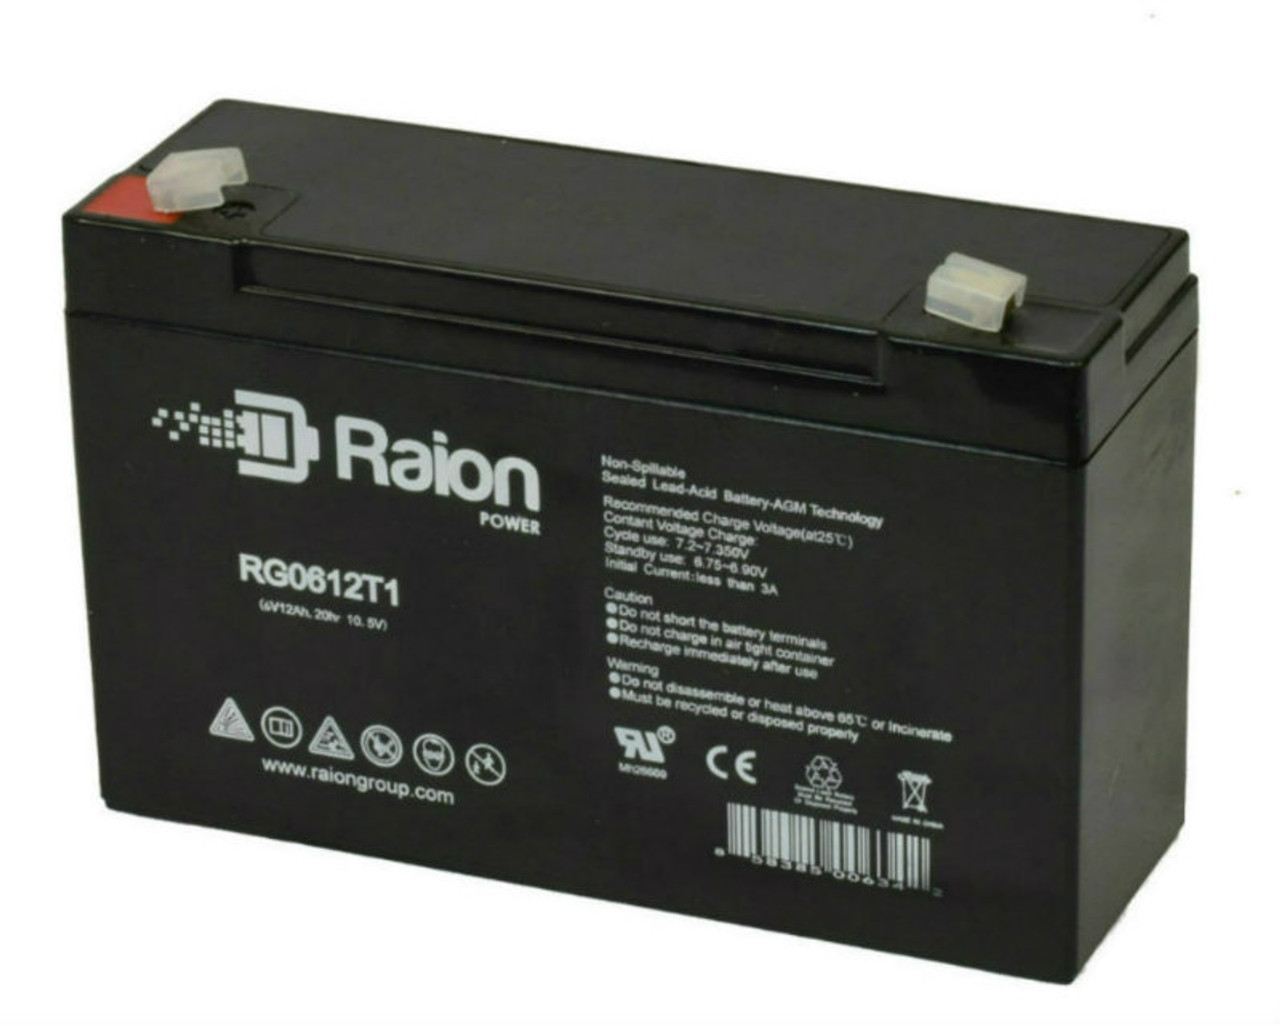 Raion Power RG06120T1 Replacement 6V 12Ah Emergency Light Battery for Hi-Light 3903